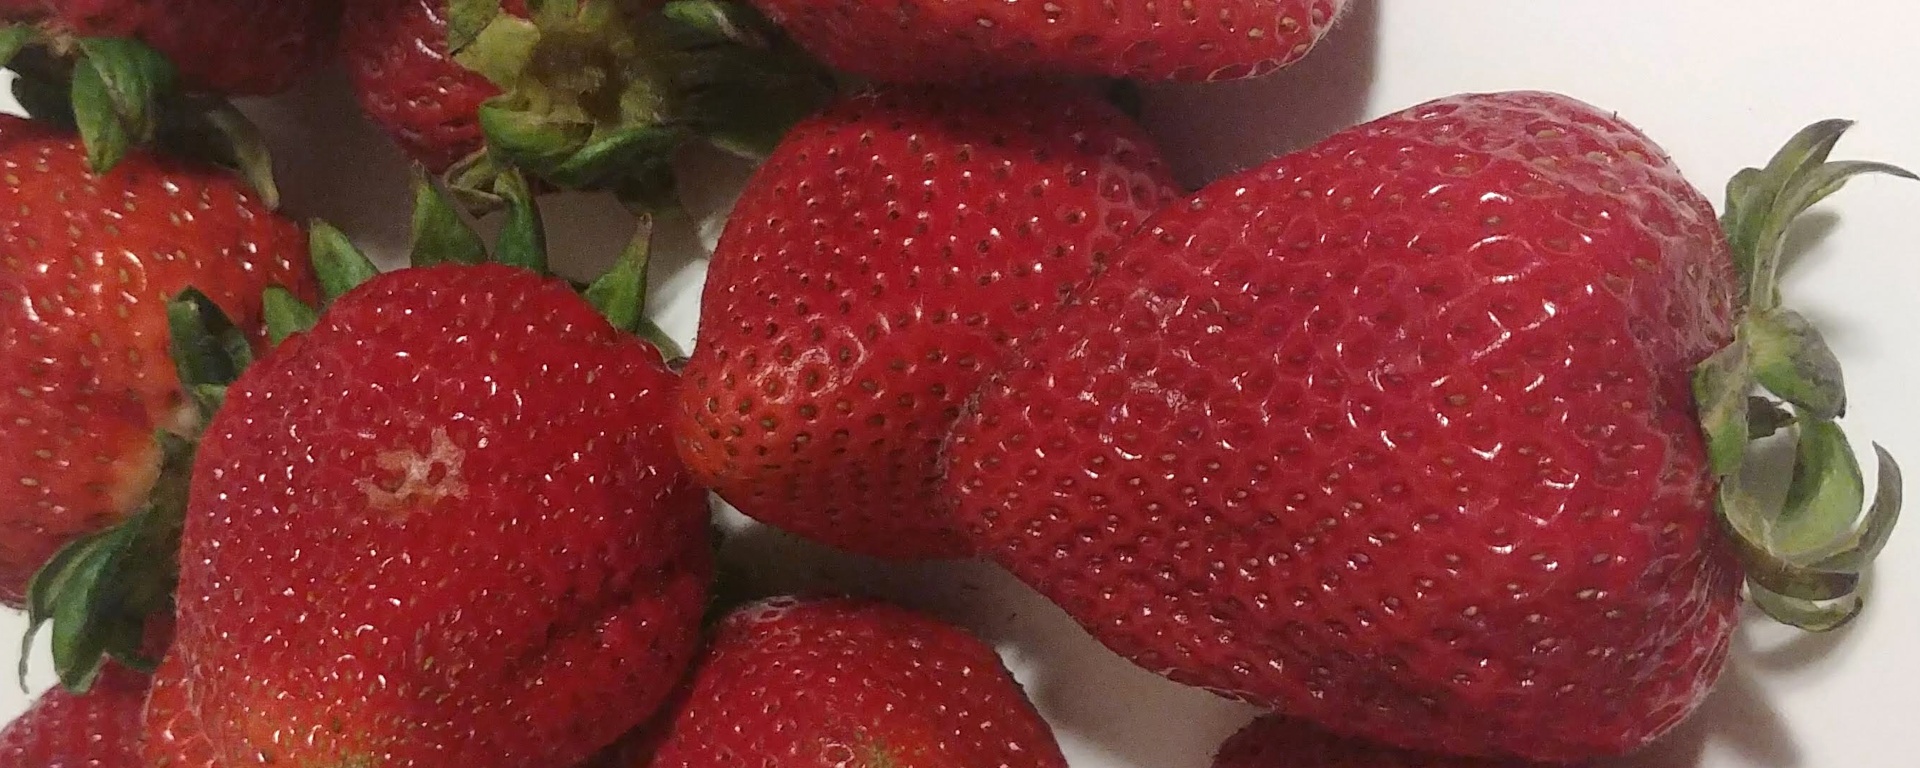 LuvMyRecipe.com - Strawberries Featured